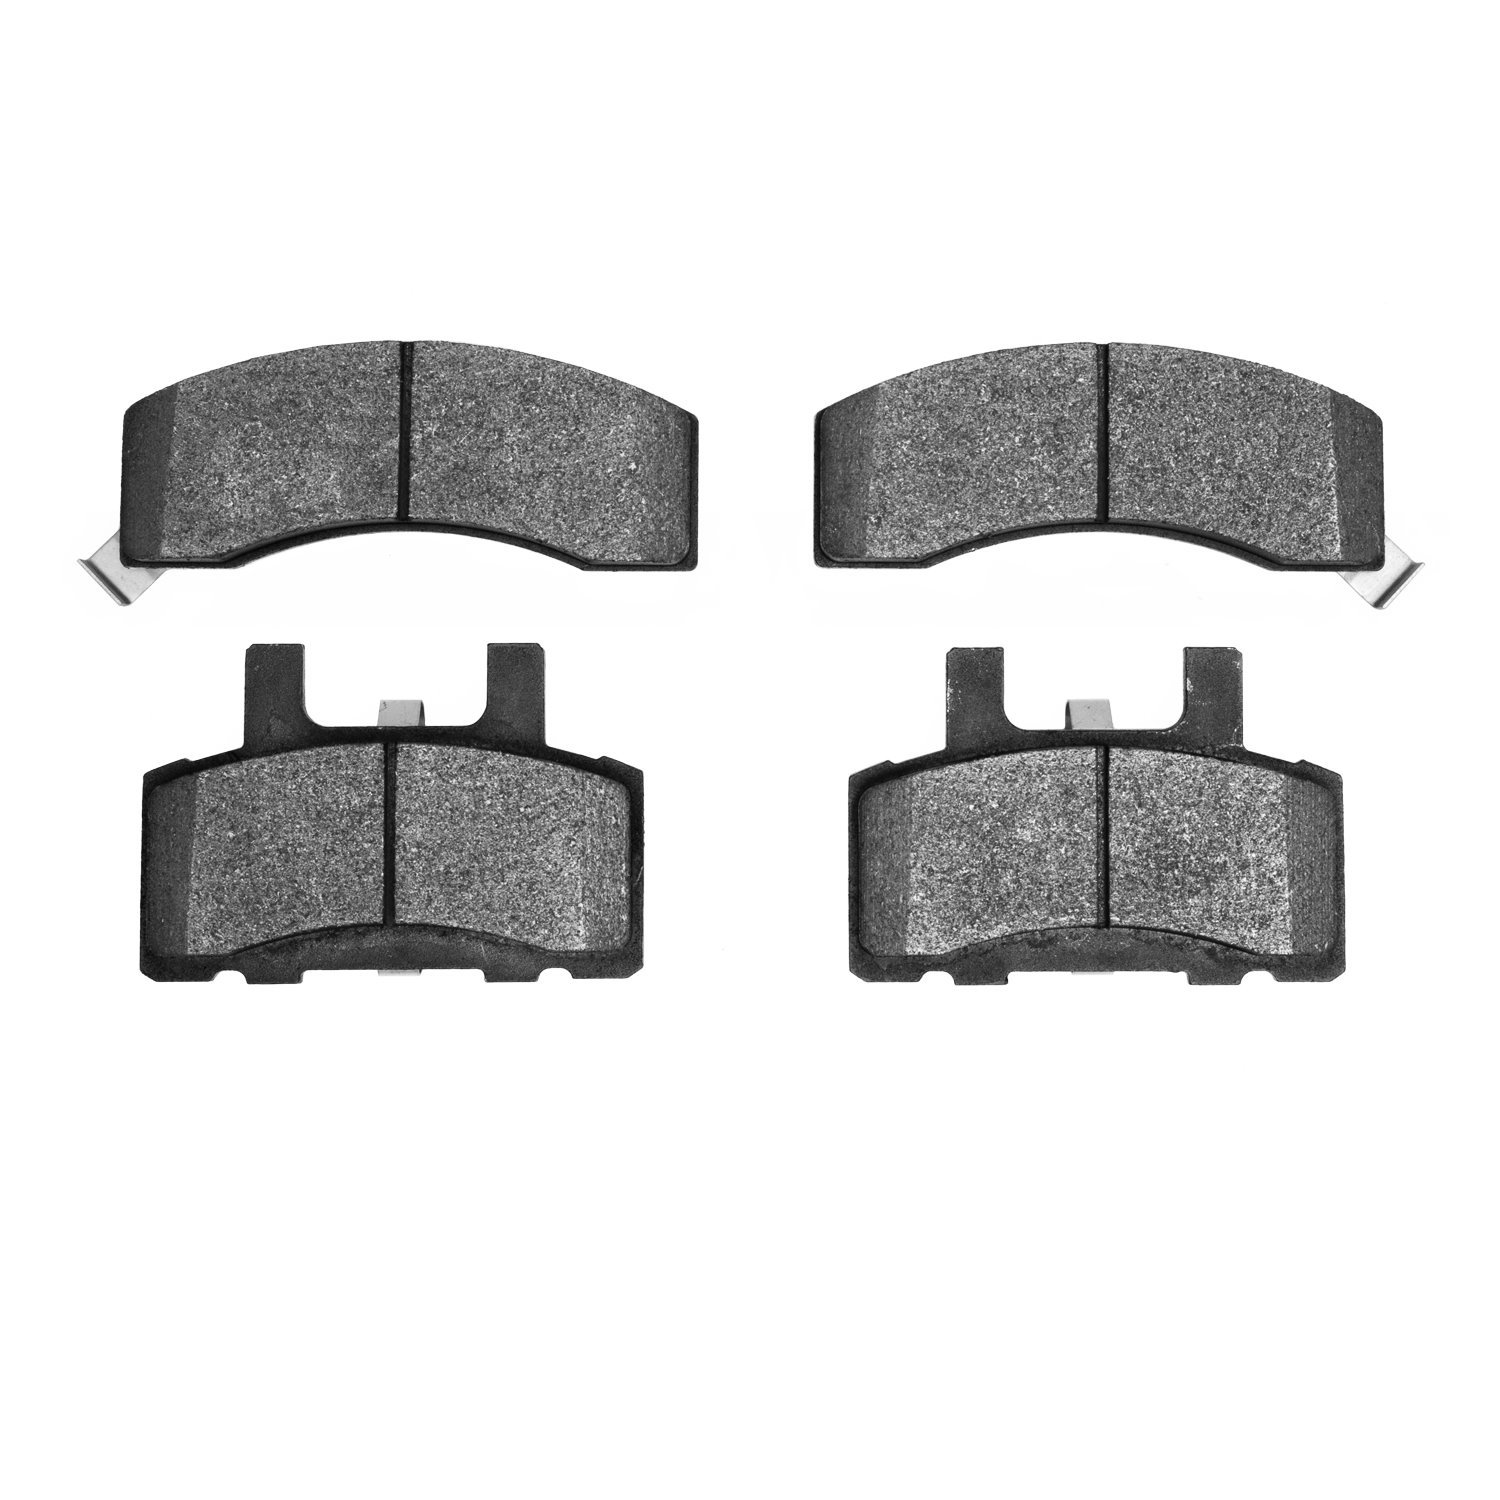 Semi-Metallic Brake Pads, 1988-2002 Fits Multiple Makes/Models, Position: Front